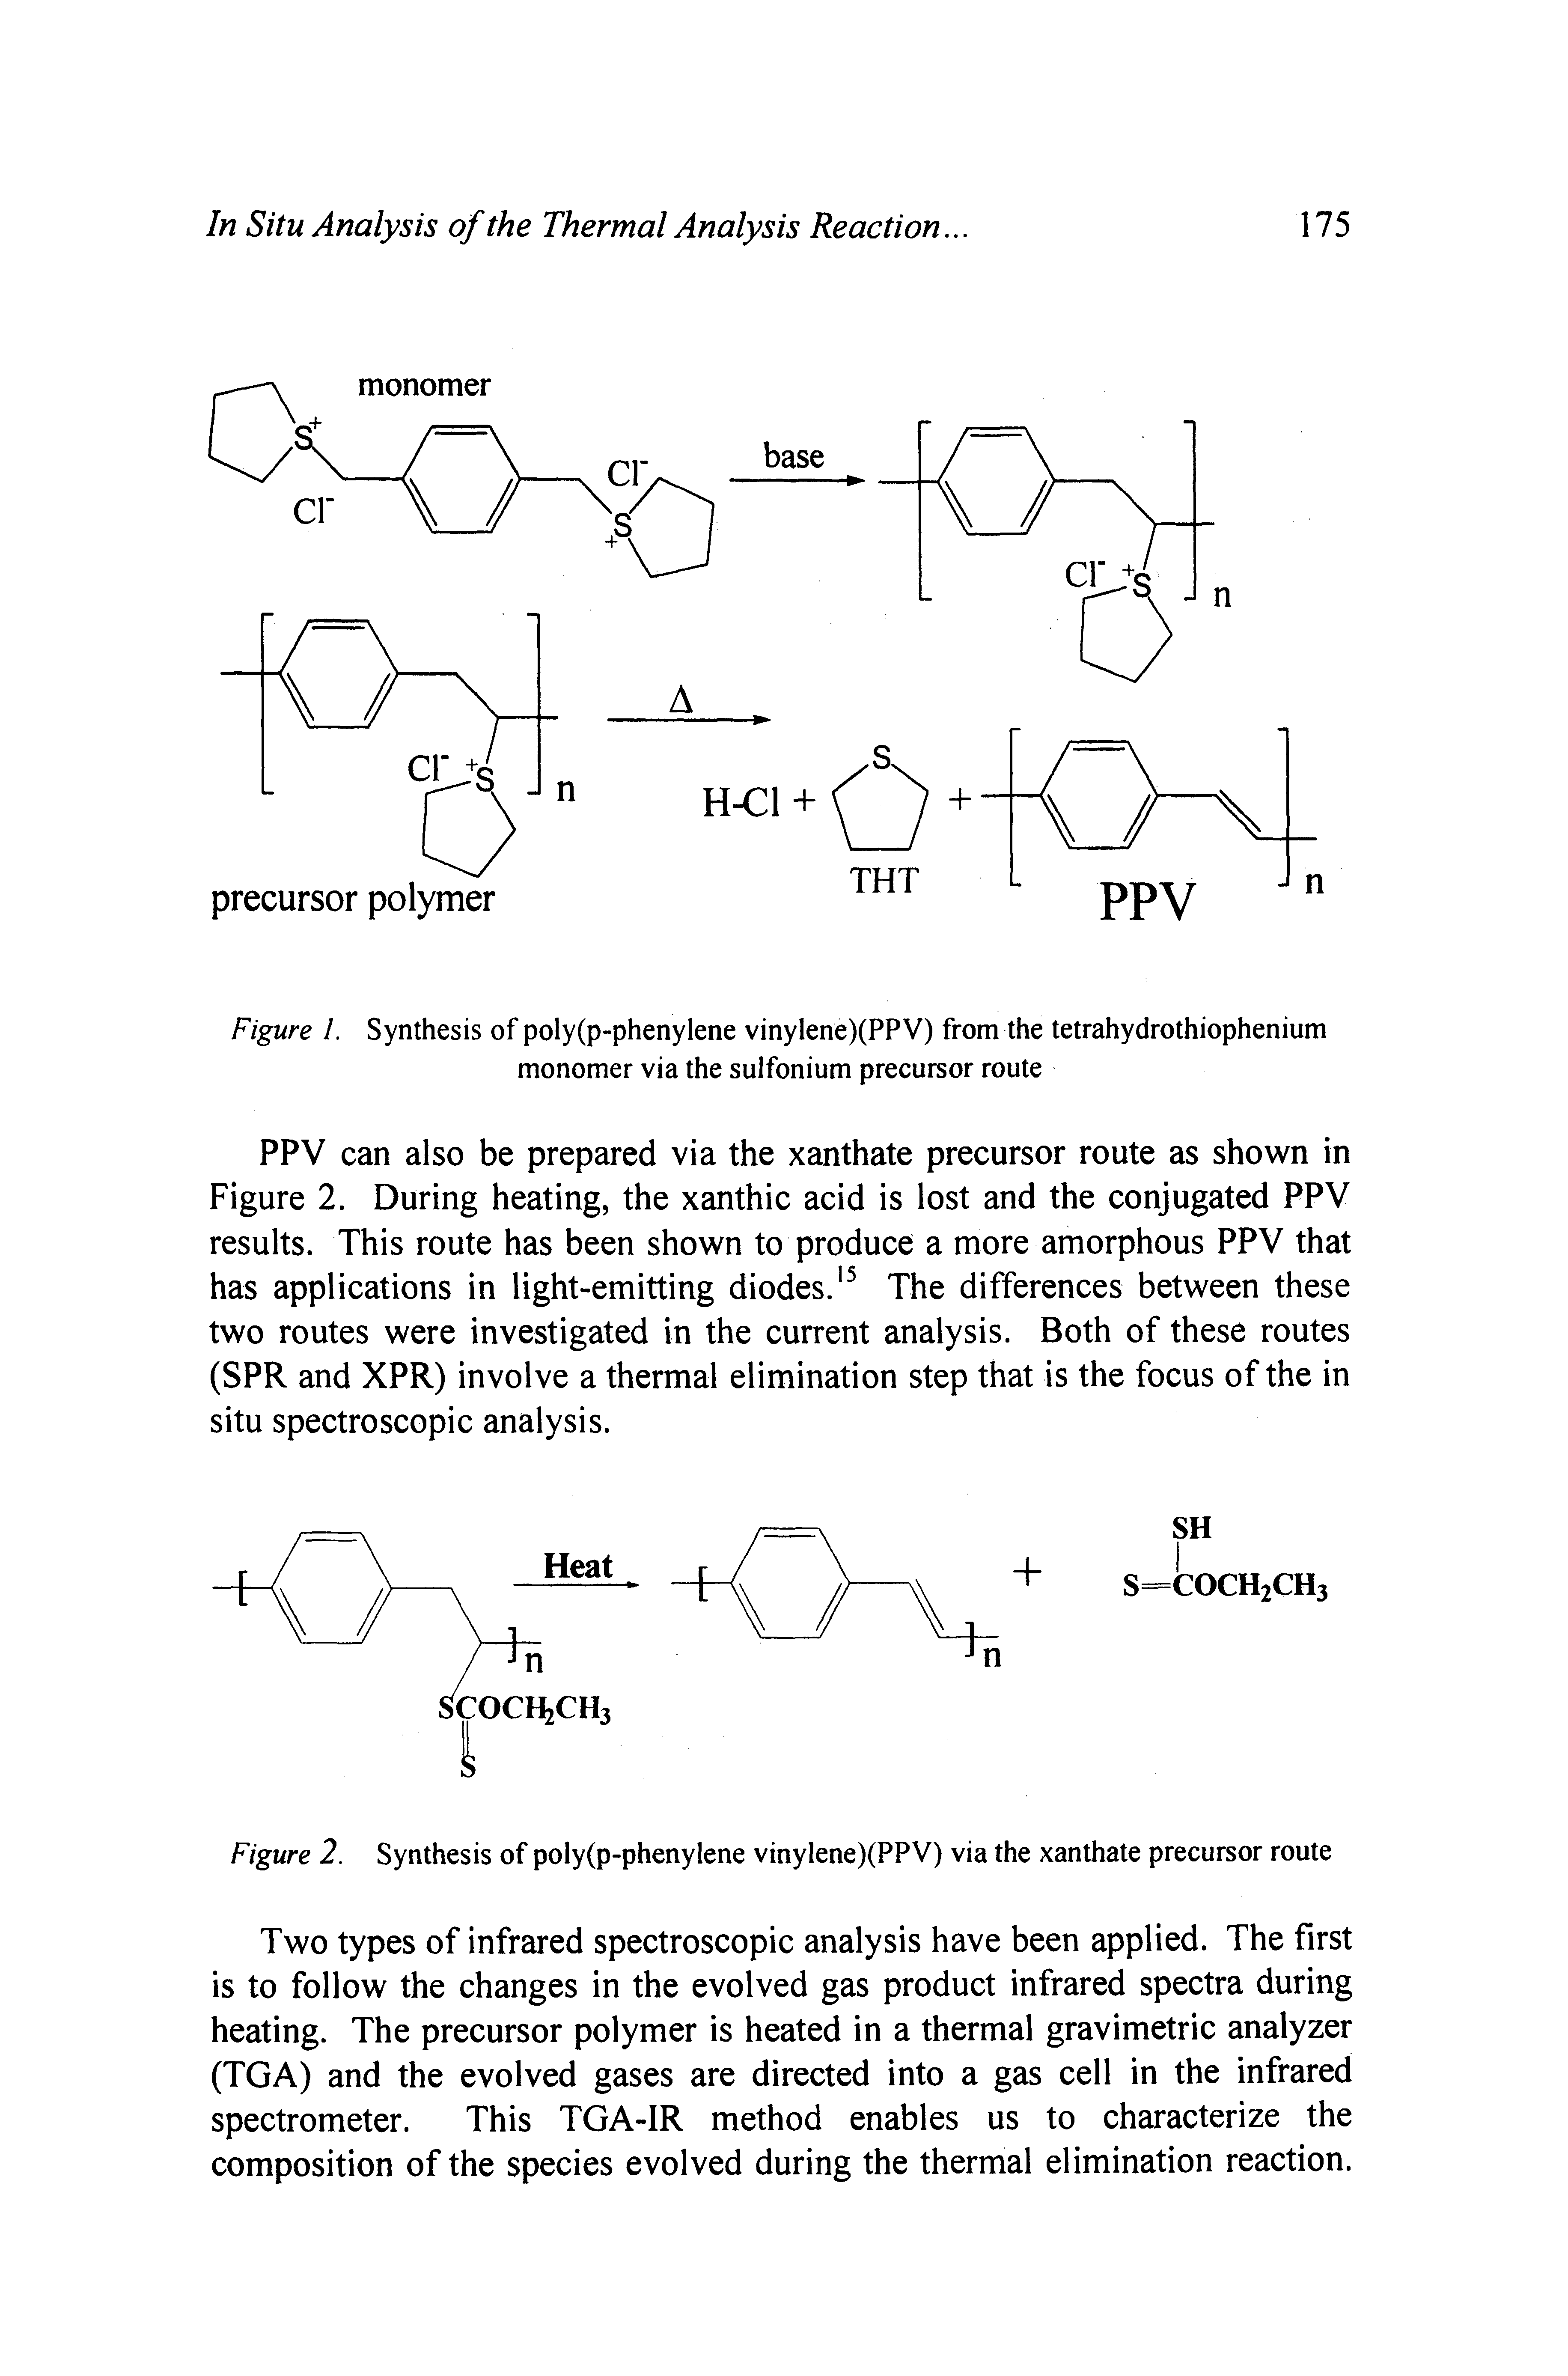 Figure 2. Synthesis of poly(p-phenylene vinylene)(PPV) via the xanthate precursor route...